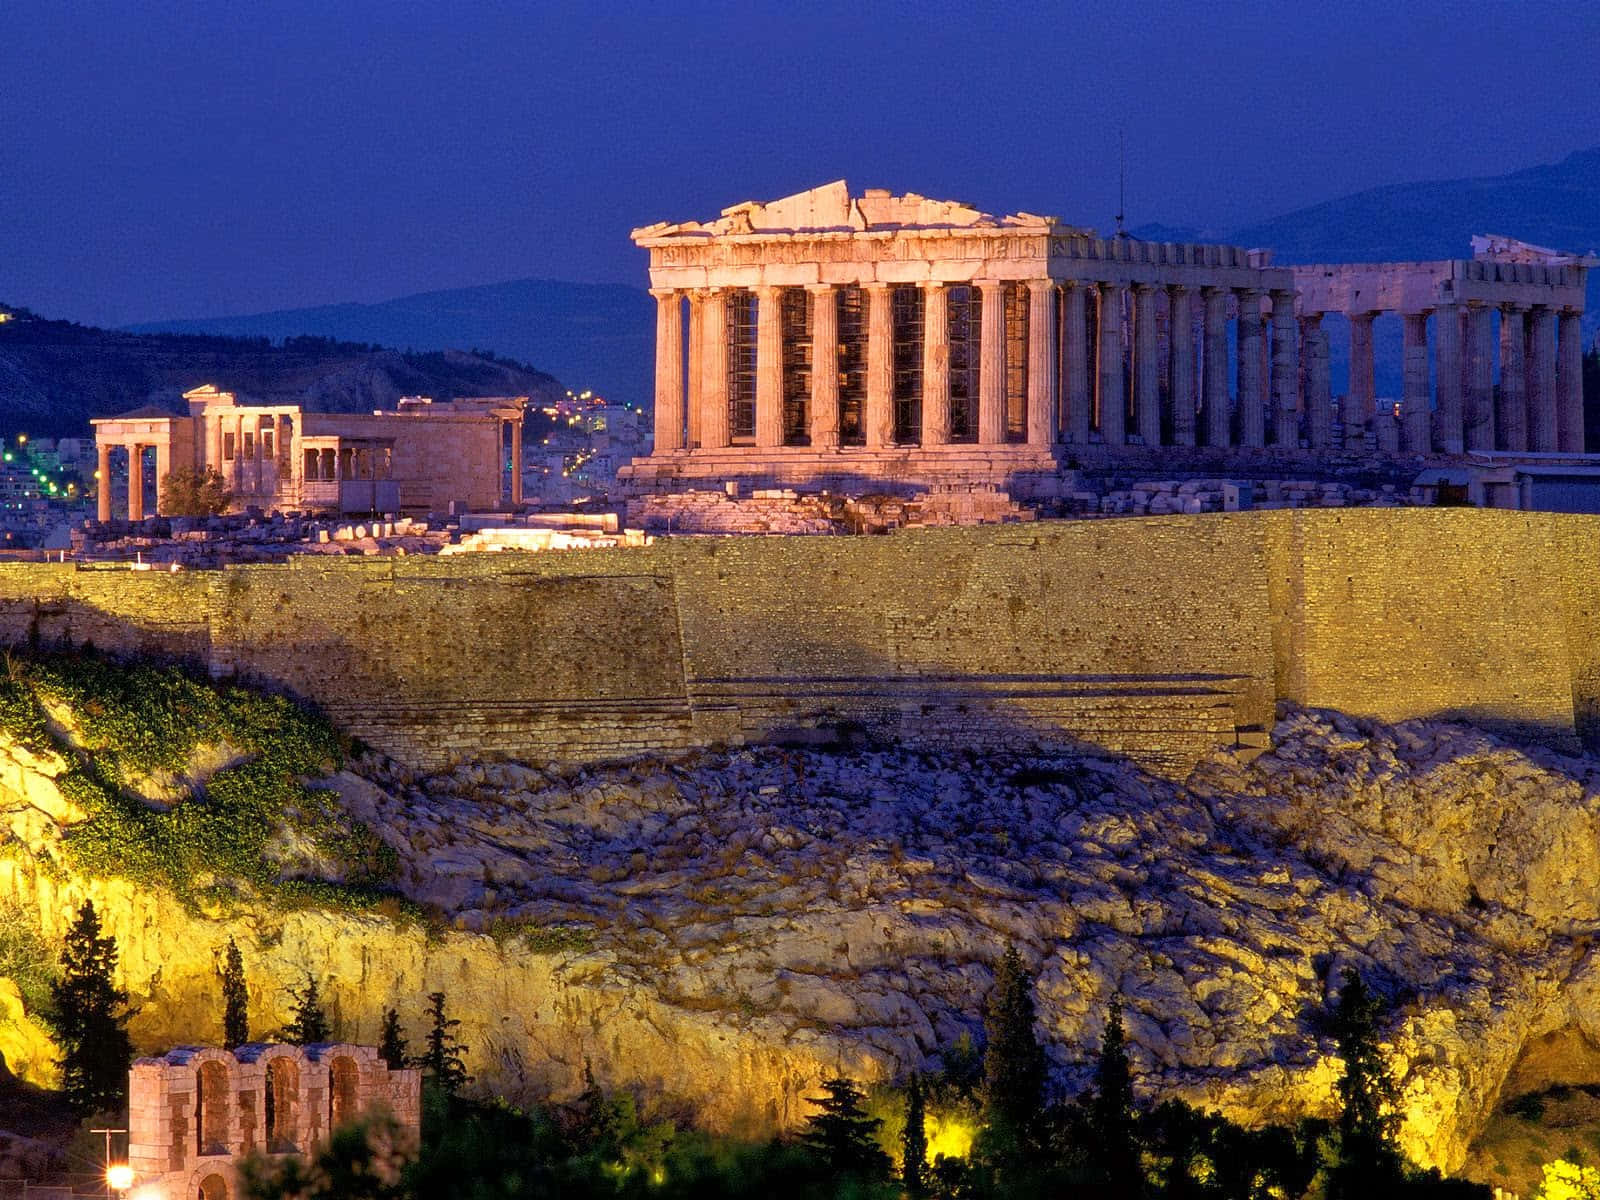 "Embrace the beauty of Greece"